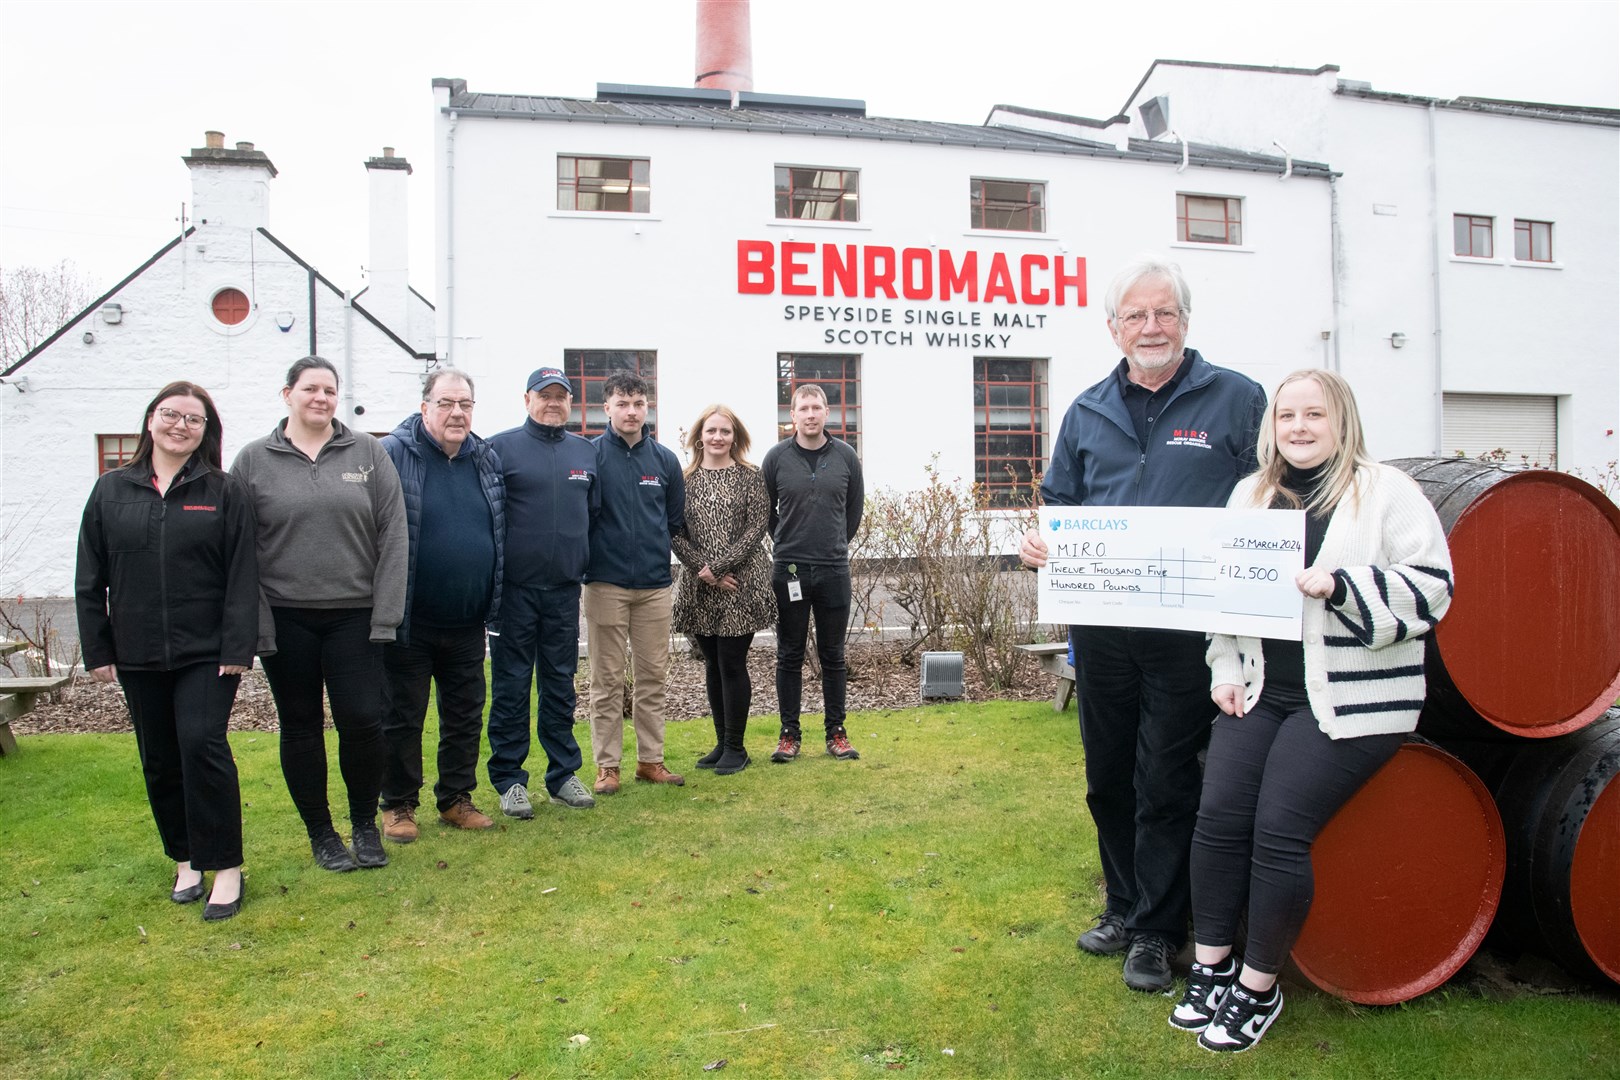 Gordon & MacPhail have raised £12,500 for Moray Inshore Rescue Organisation. Picture: Daniel Forsyth.